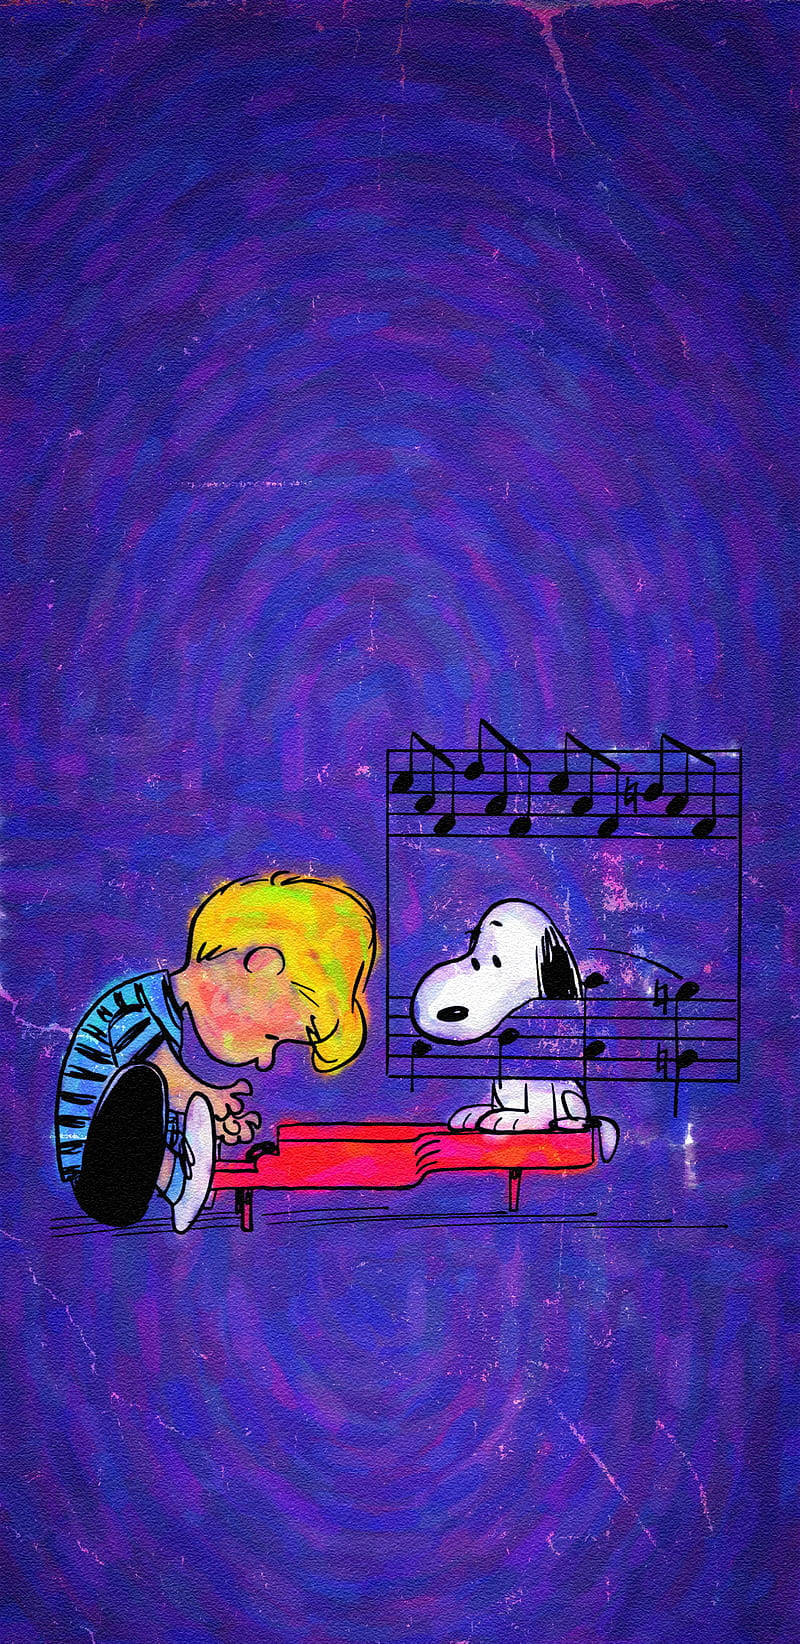 Peanutsschroeder Och Snoopy Konst. Wallpaper